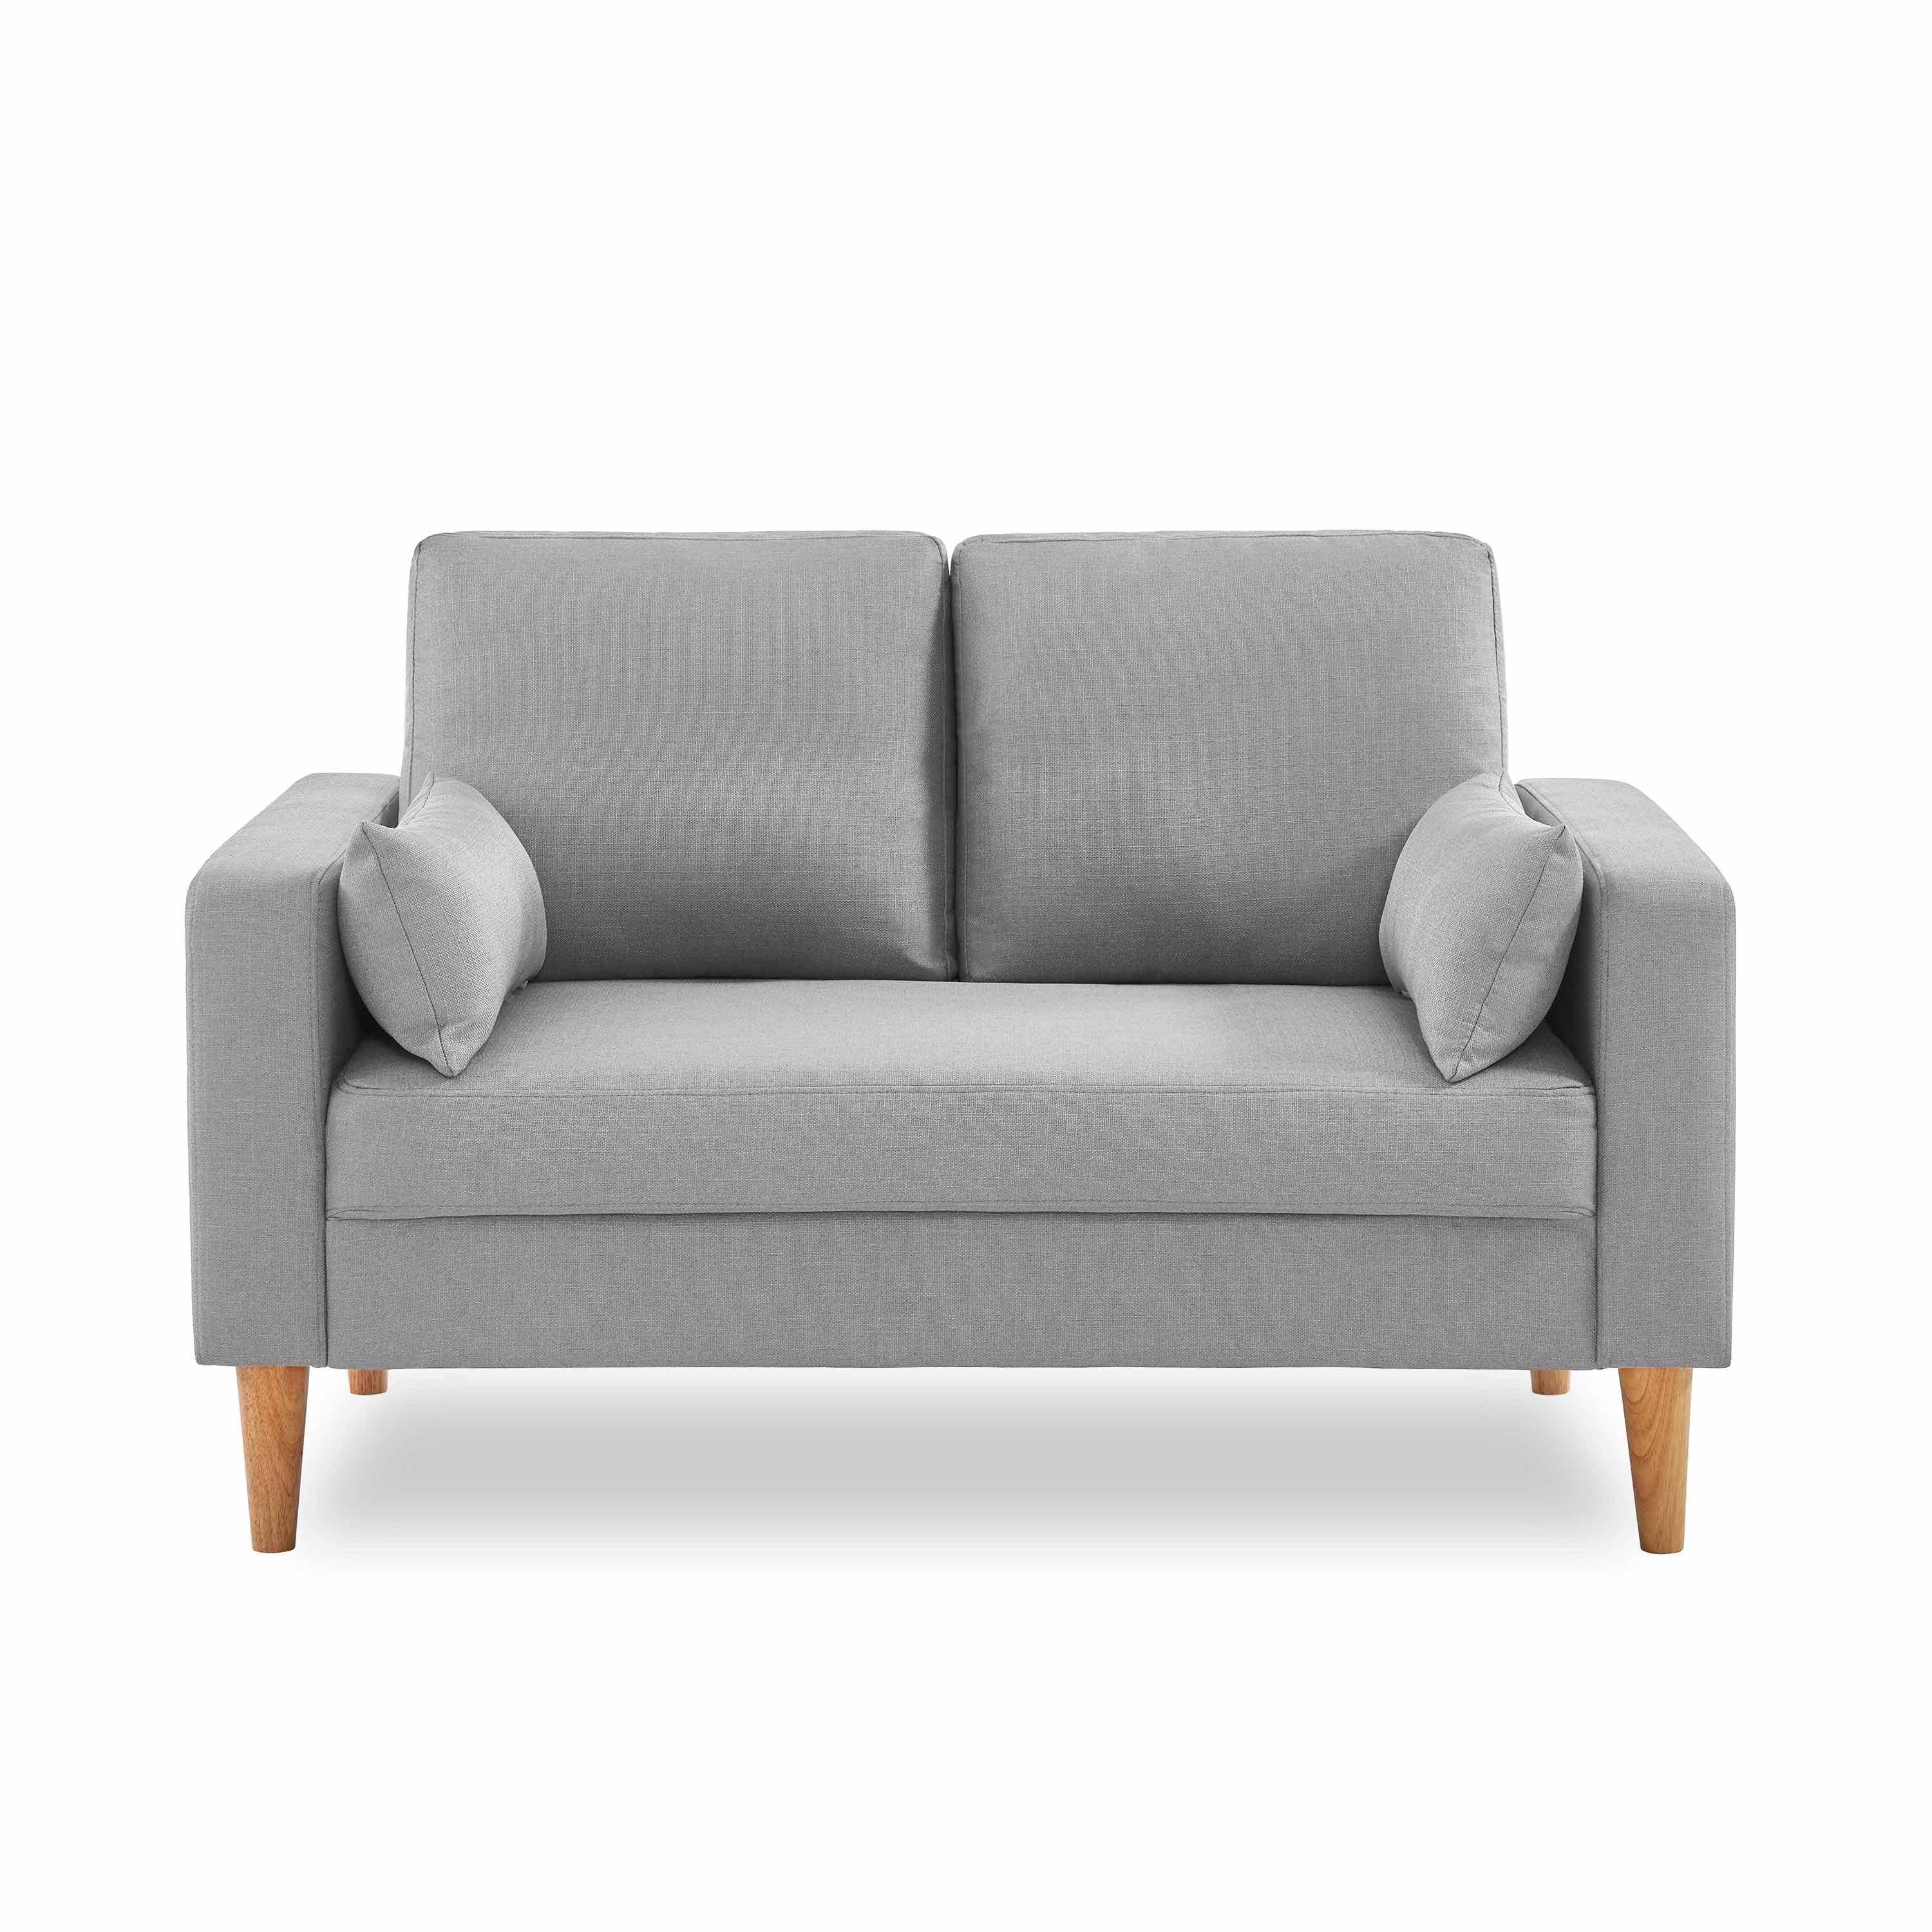 Medium 2-seater sofa Scandi-style with wooden legs - Bjorn - Light Grey Photo3